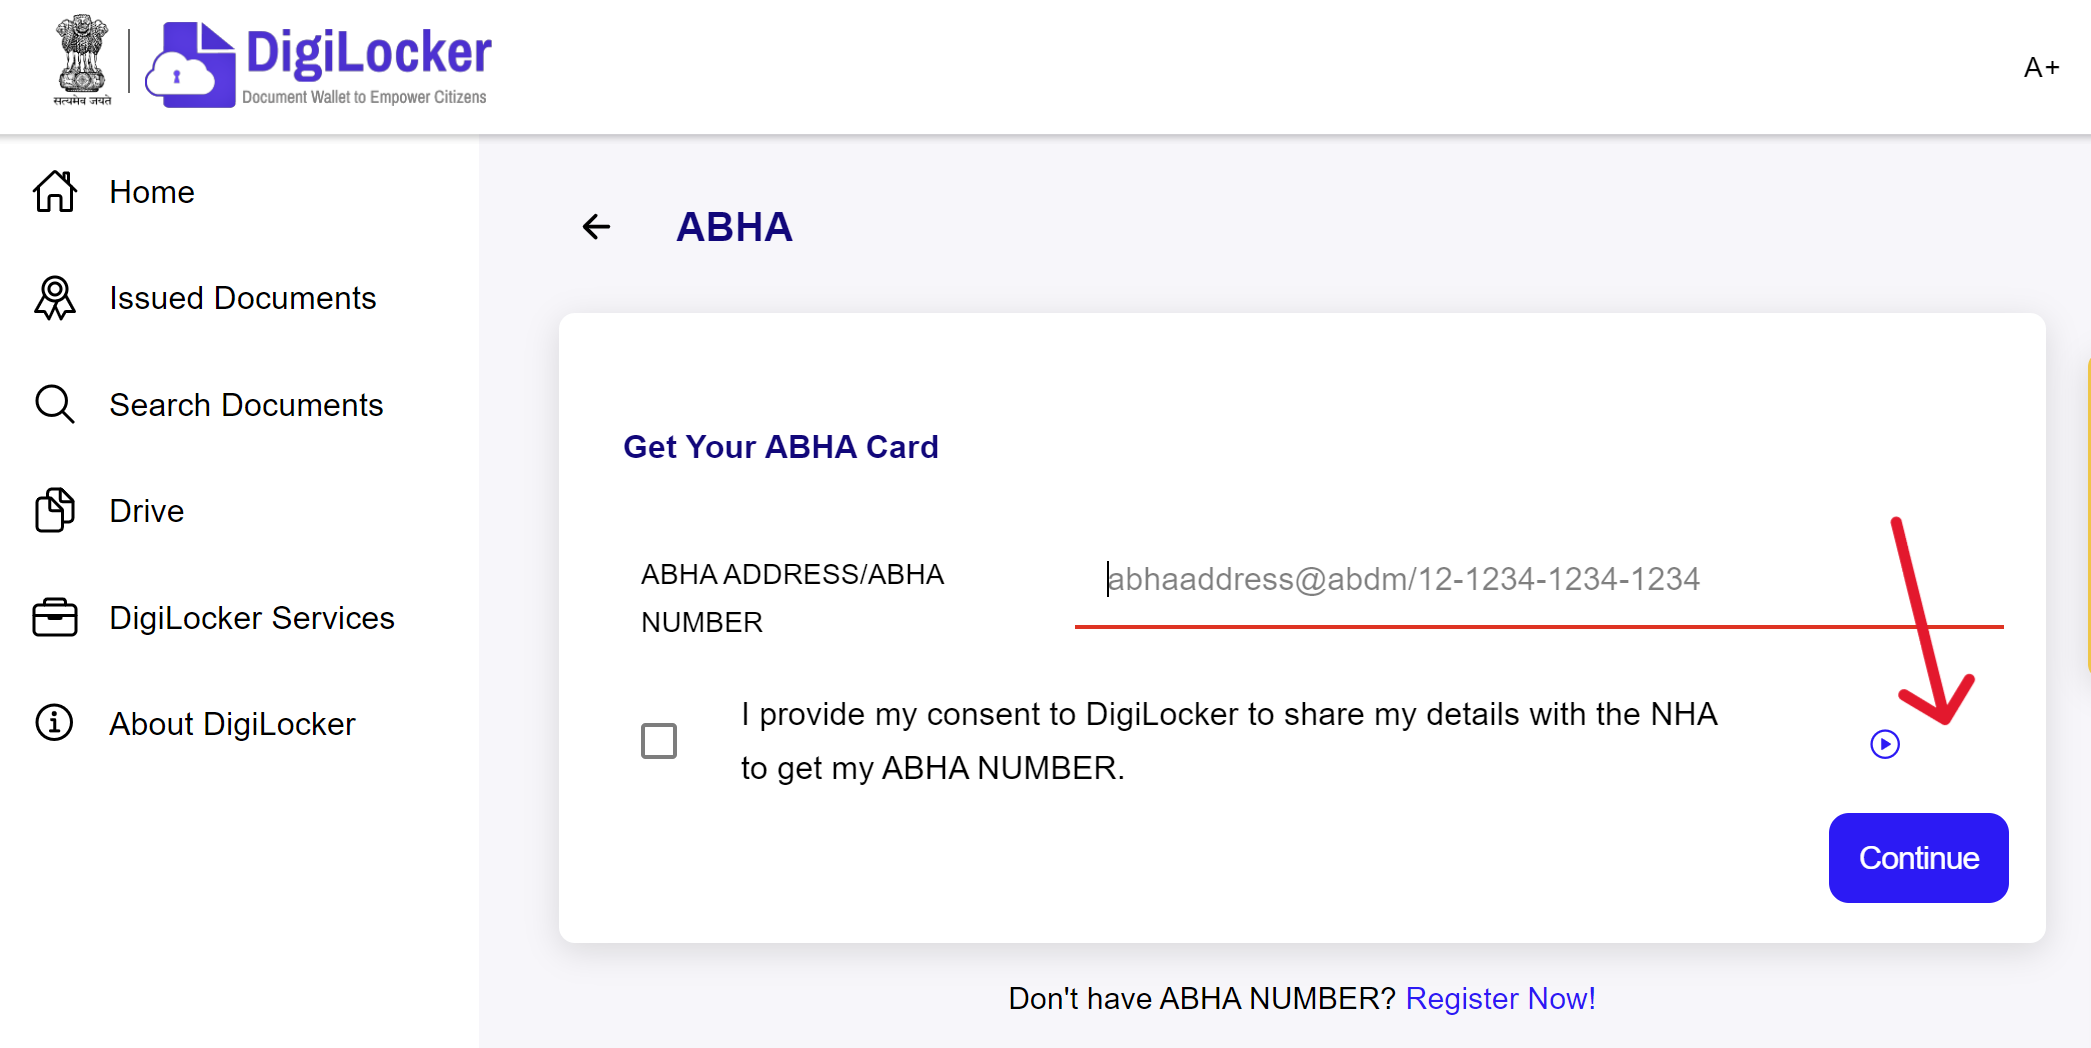 Get Your ABHA